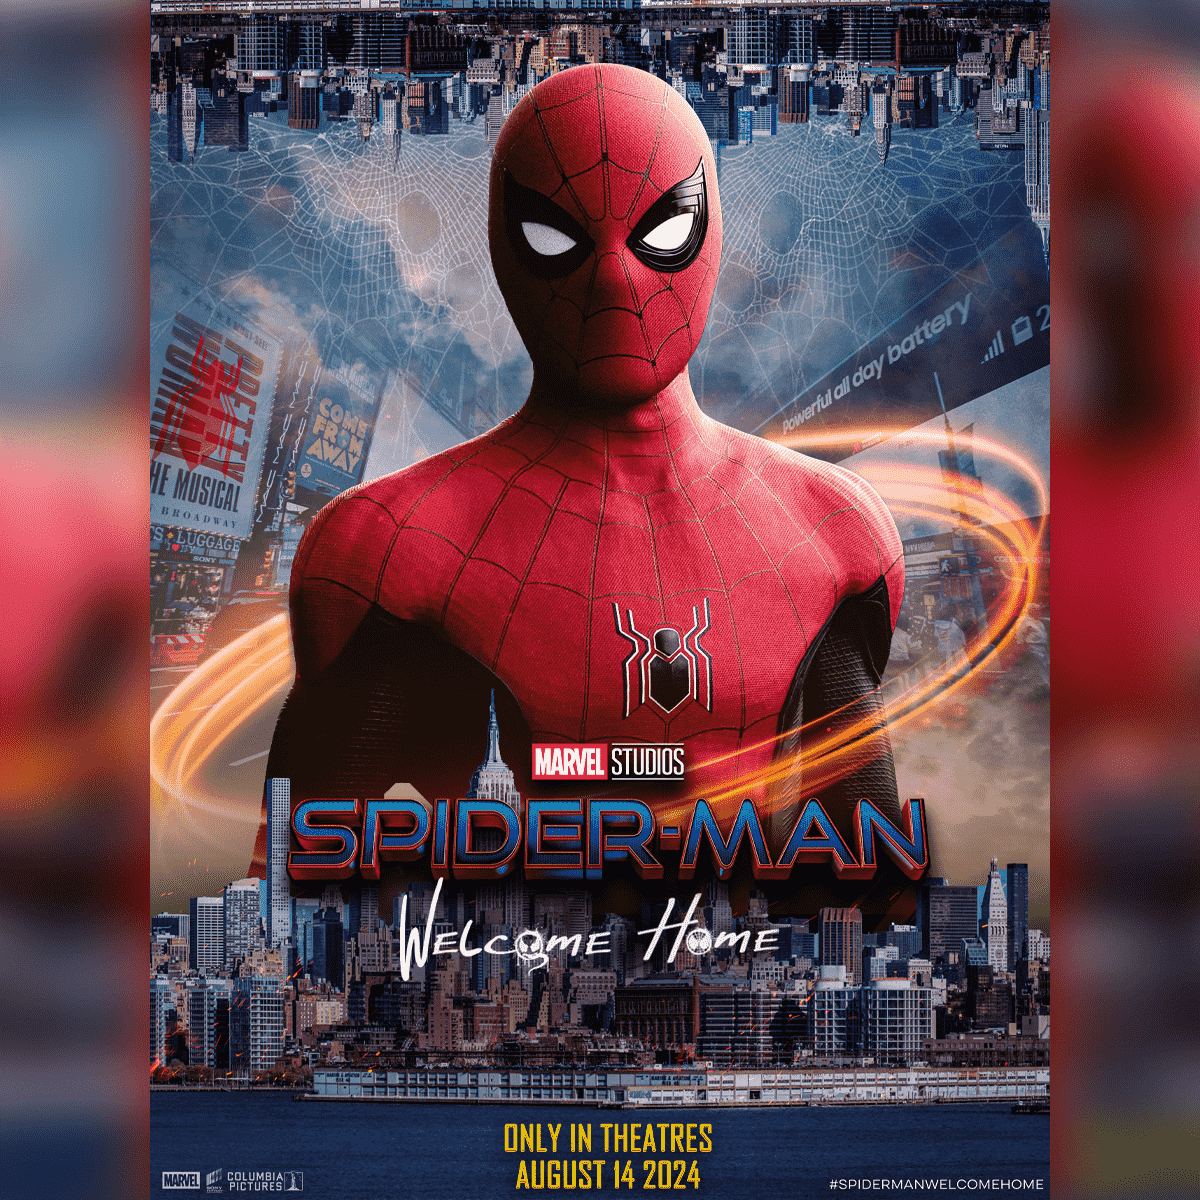 Spiderman Movie Poster